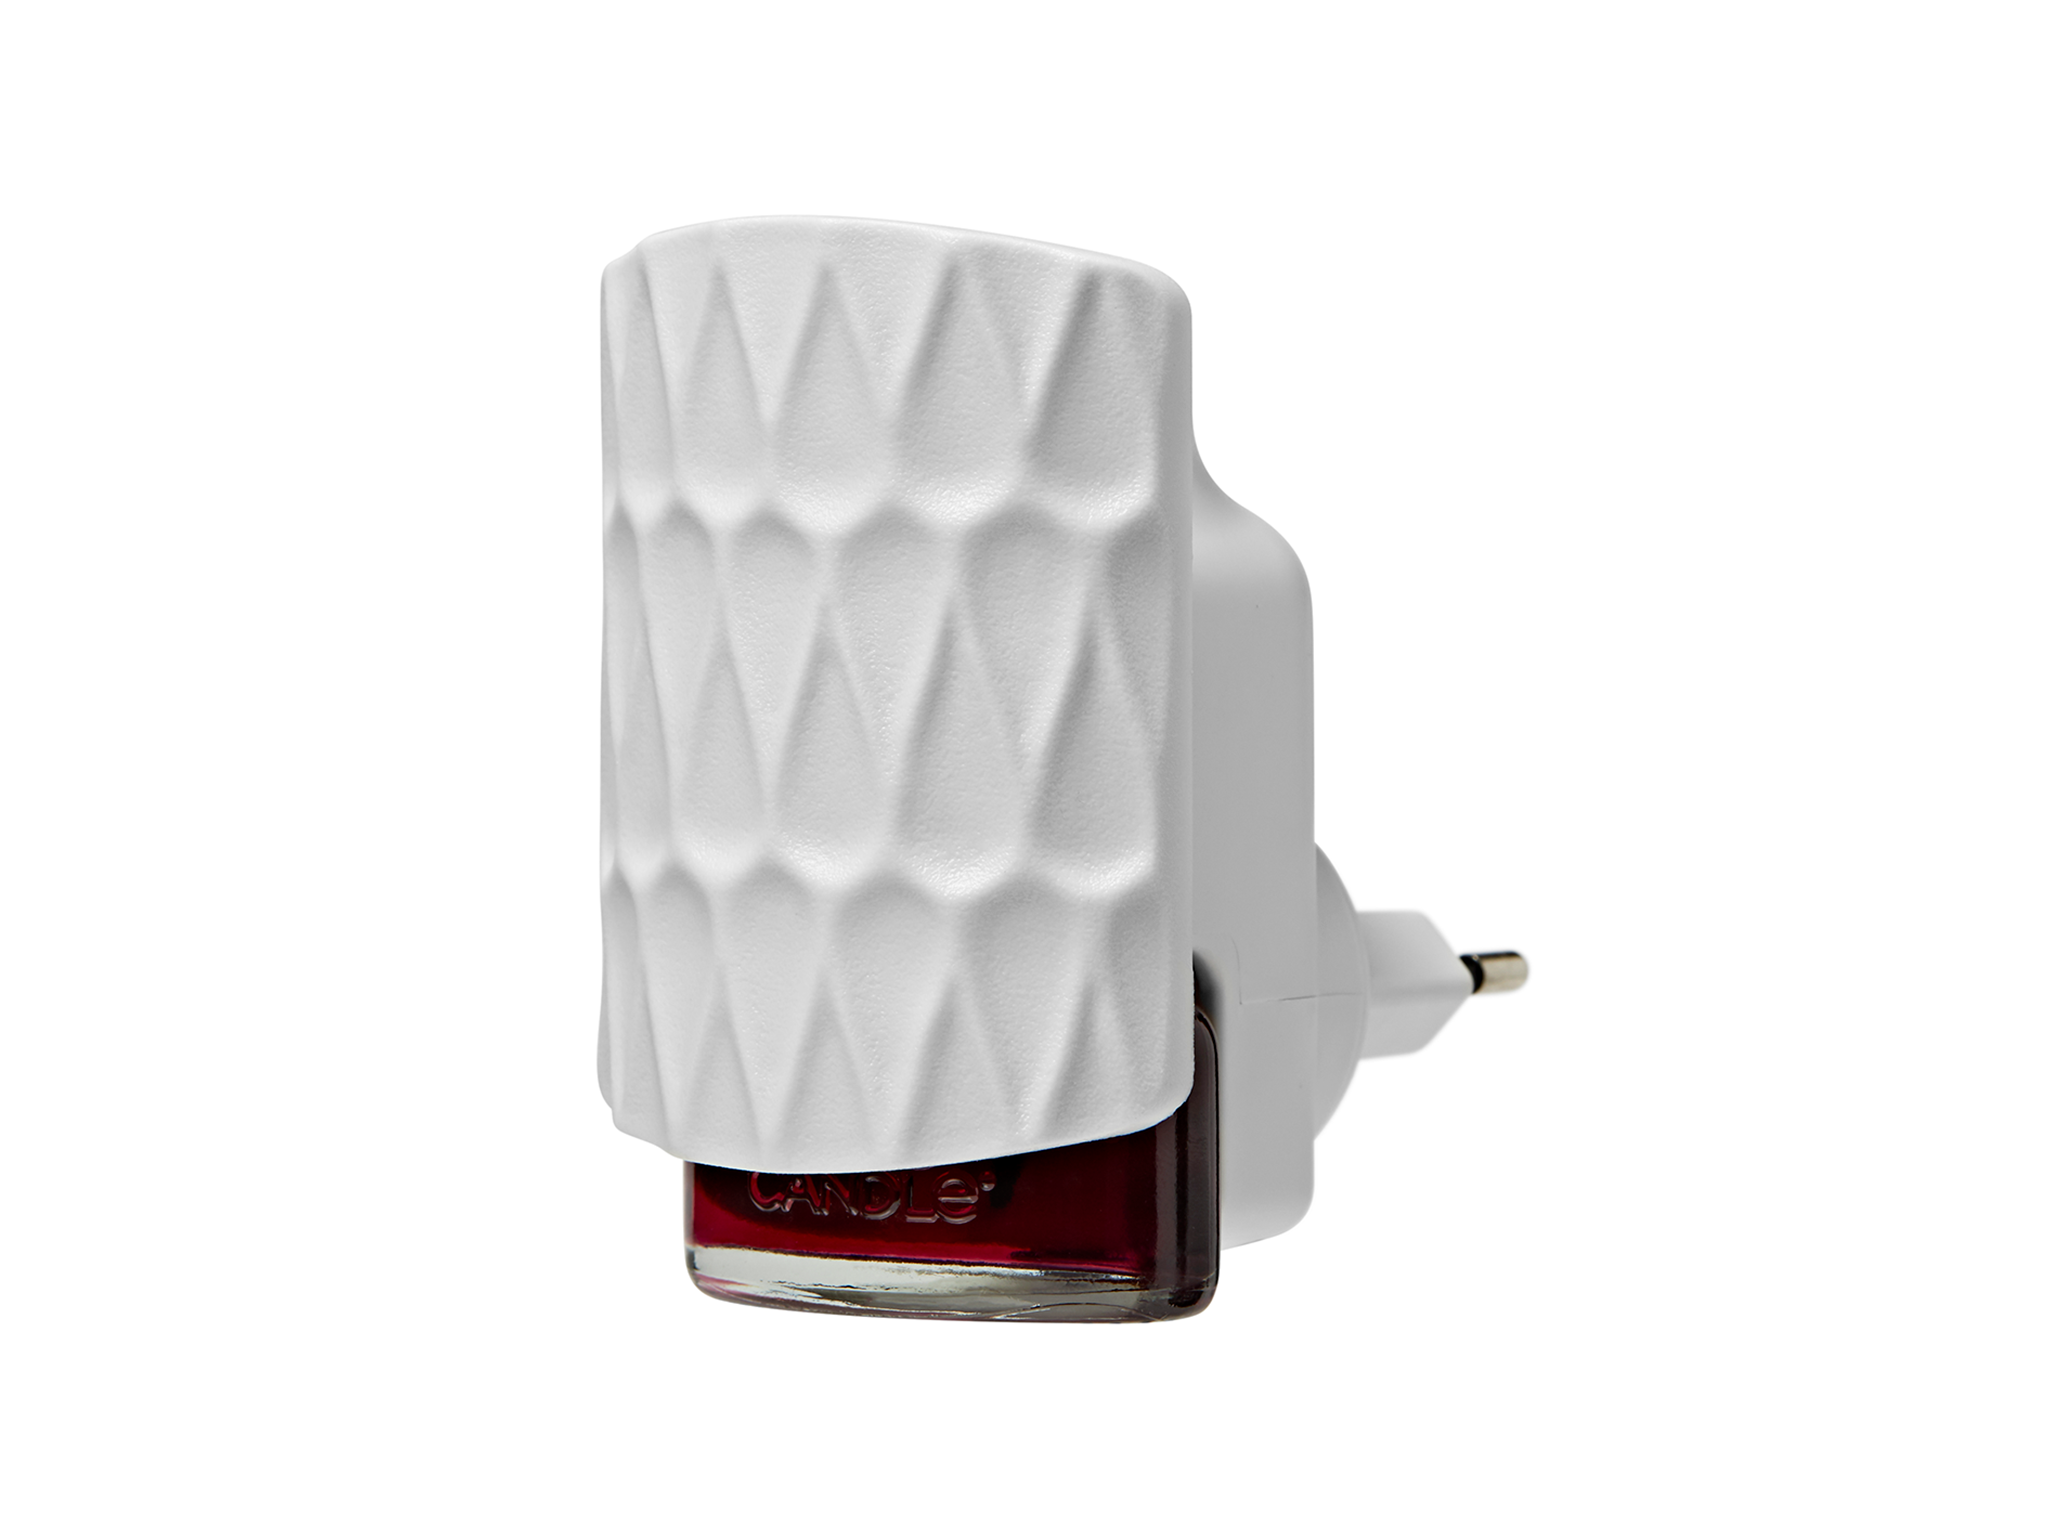 yankee candle scentplug indybest plug in air freshener